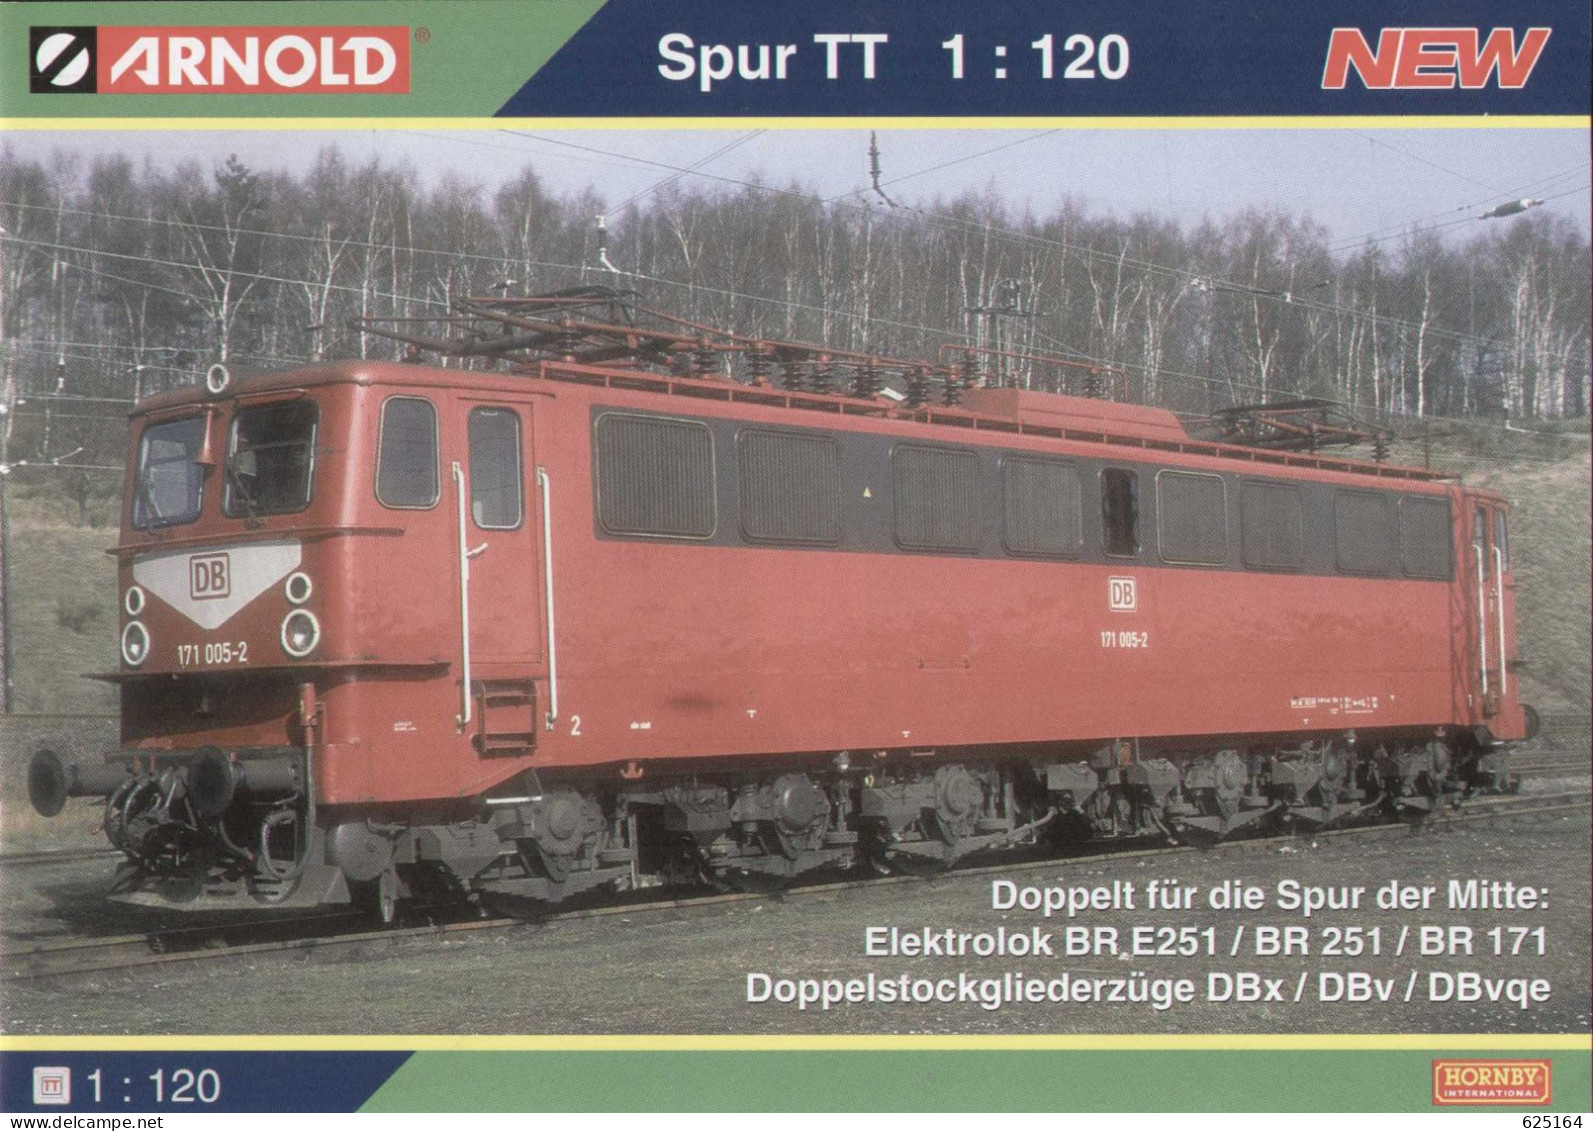 Catalogue ARNOLD Neuheiten 2014 Spur TT 1/120 (Hornby) - Deutsch